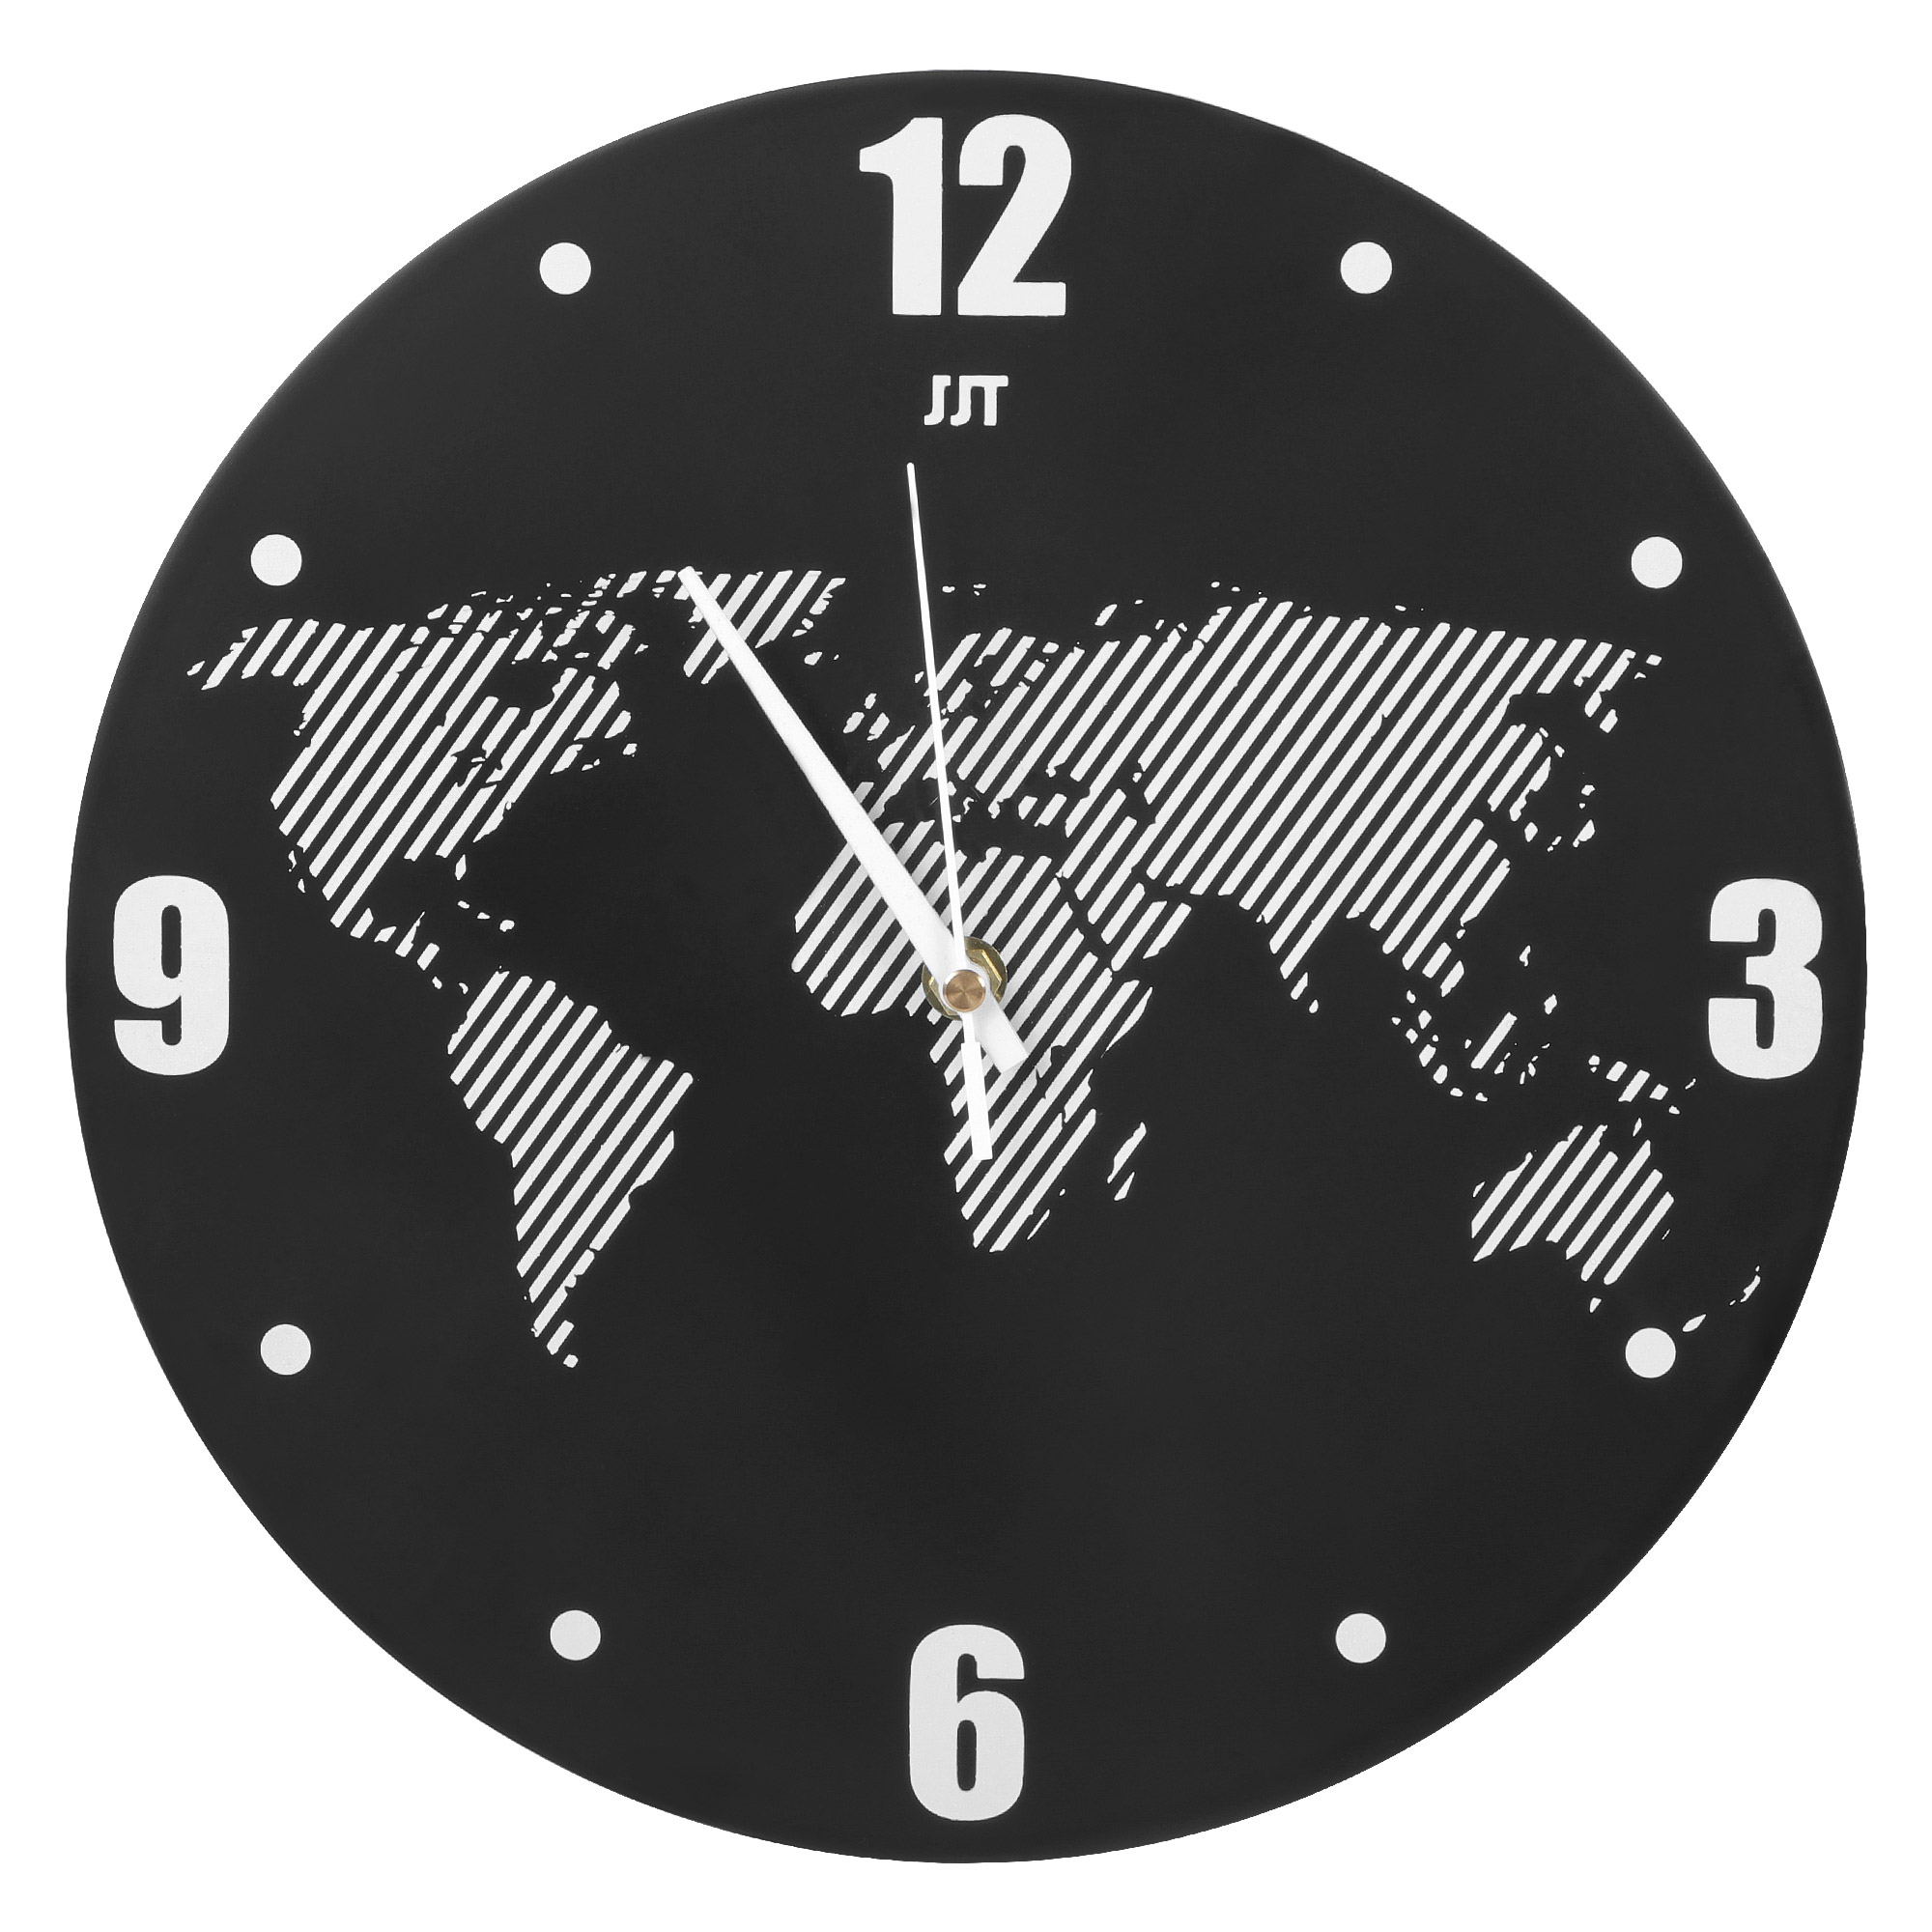 Часы настенные JJT Карта мира 29х29 см часы электронные настольные настенные будильник календарь термометр 3 5 х 7 х 26 5 см